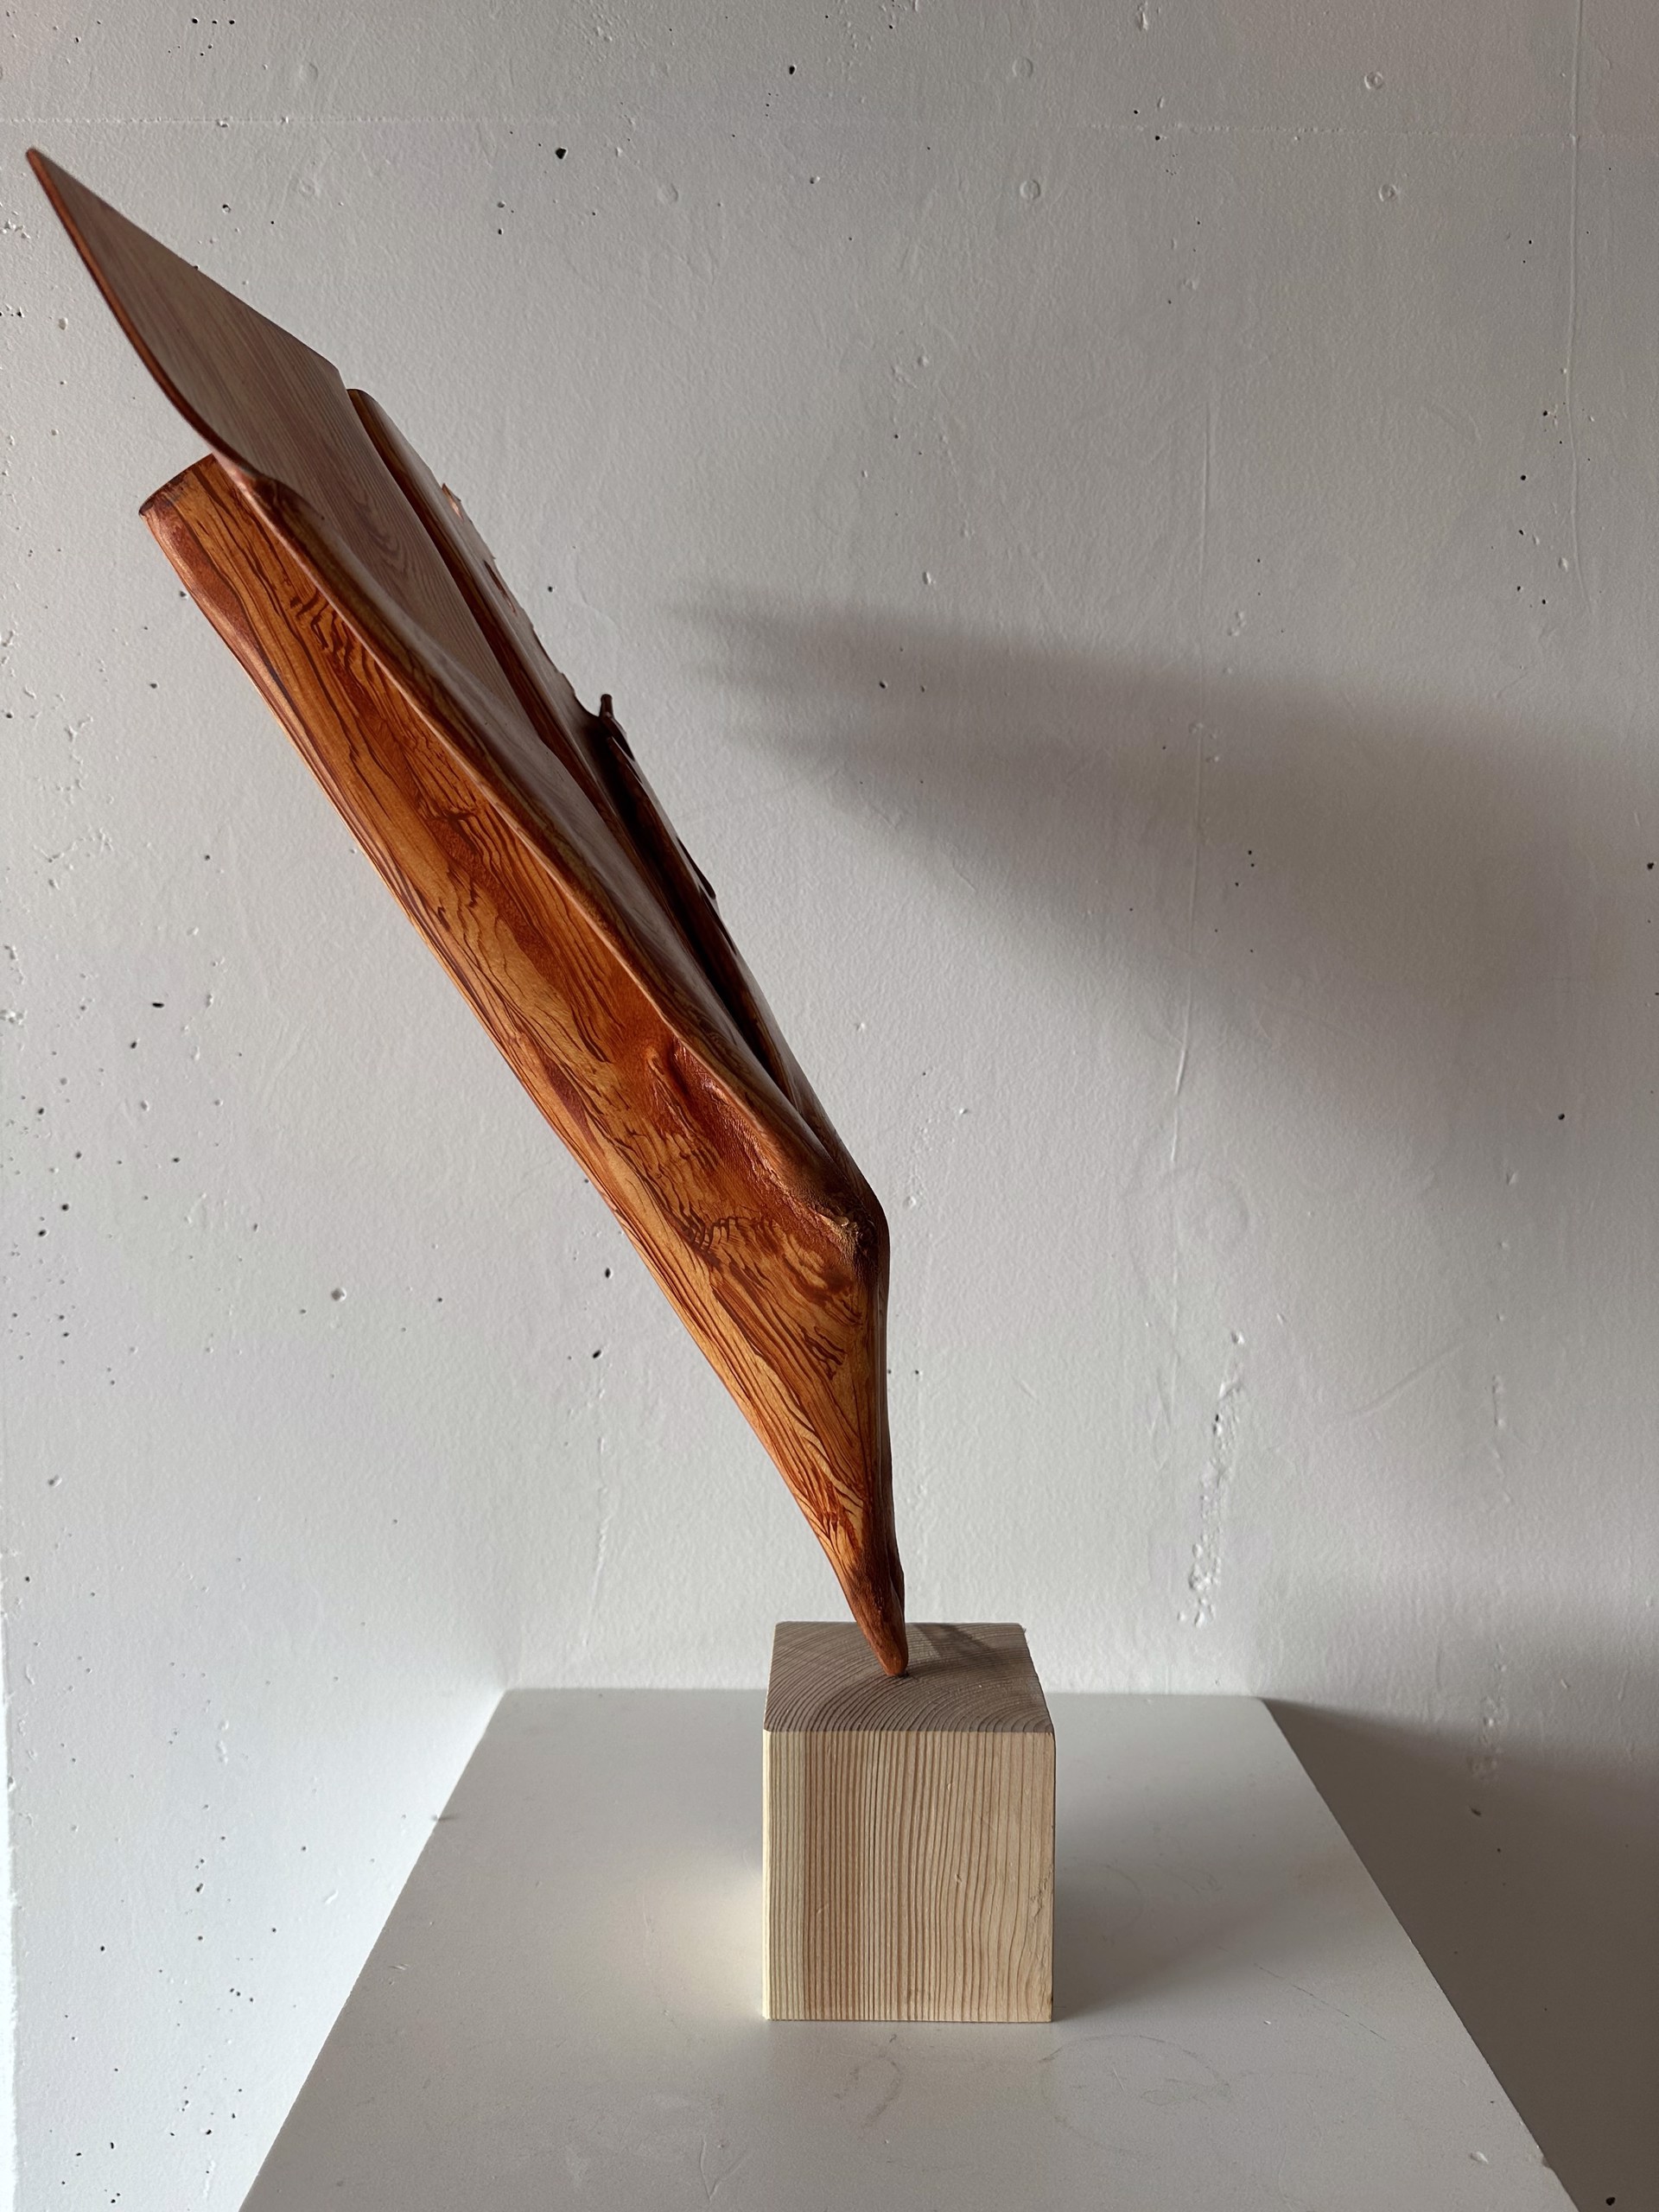 Wooden Paper planes by Johannes Ehemann